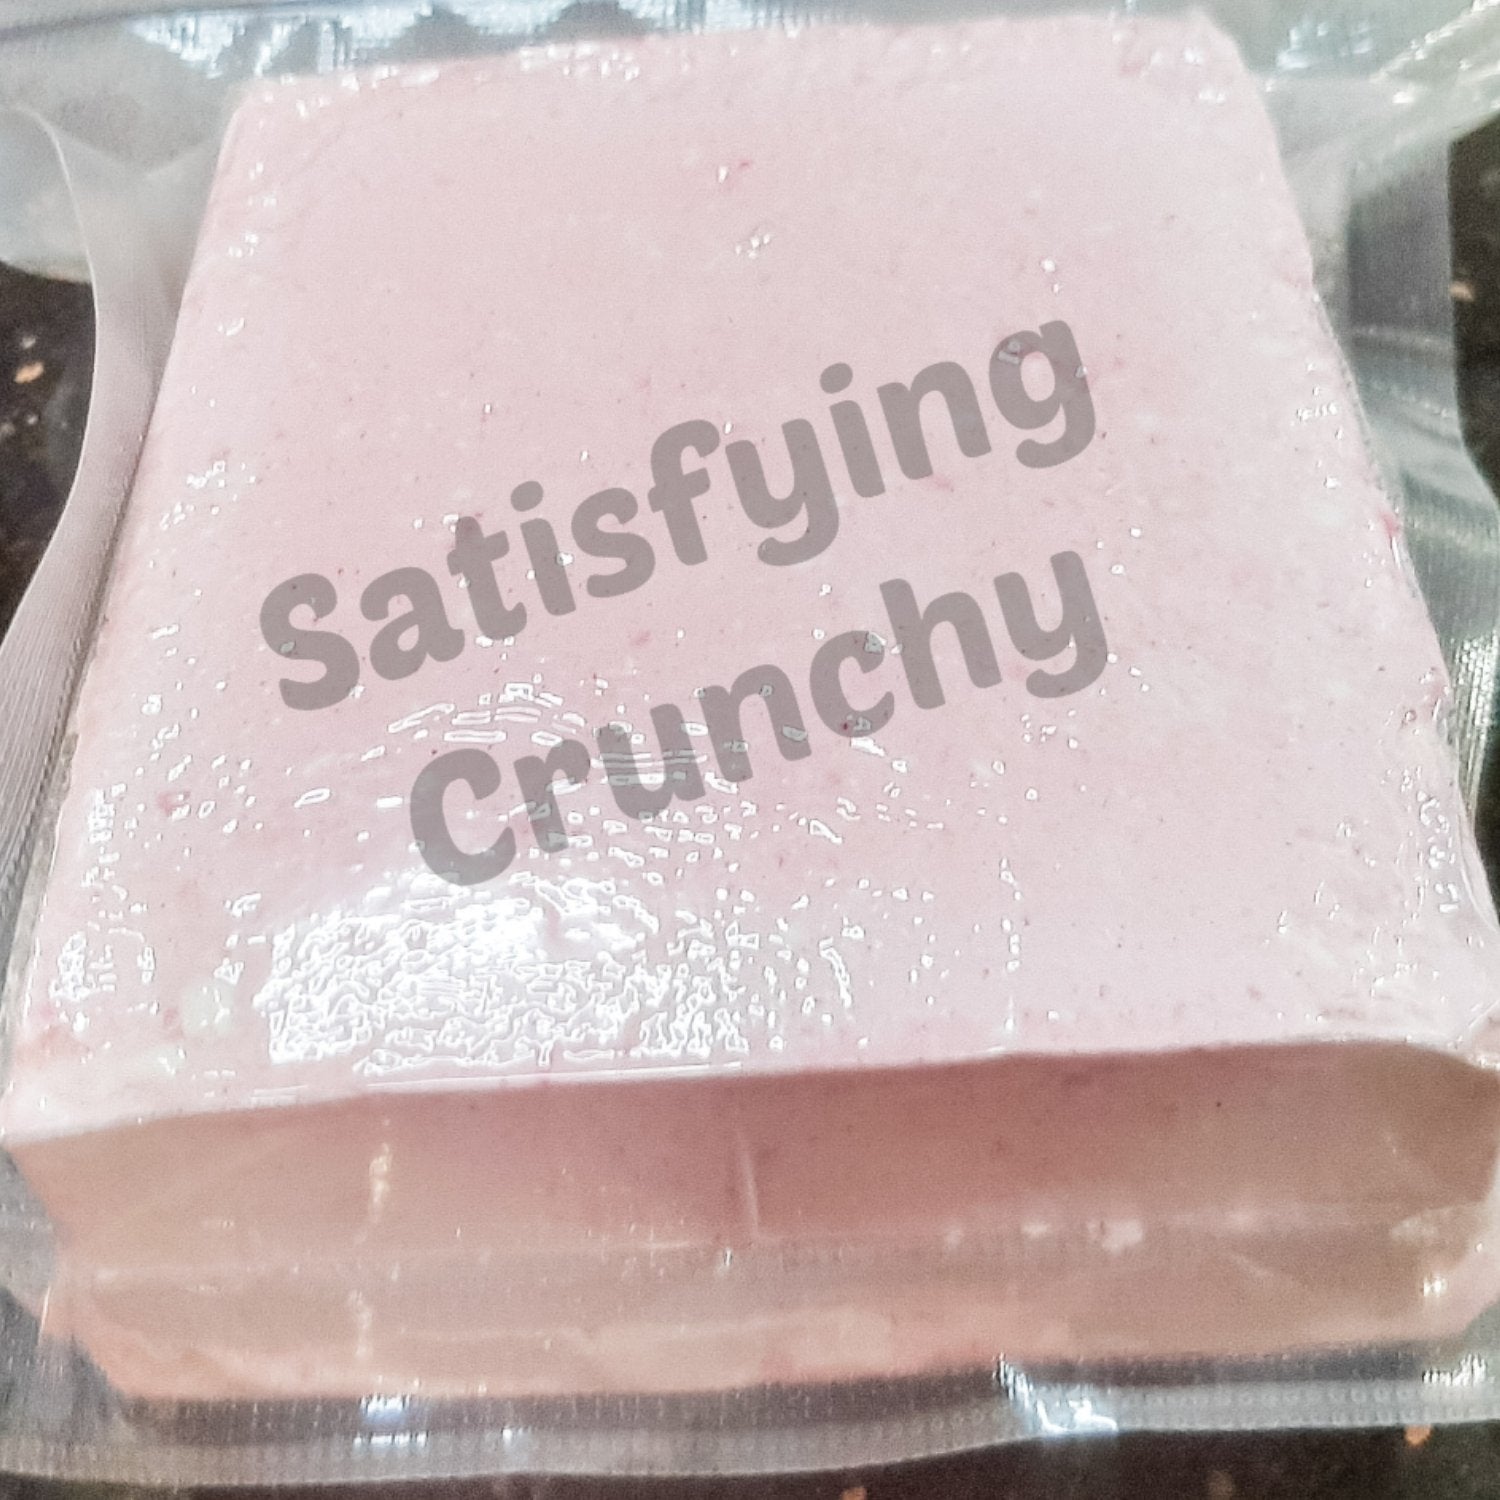 PRESSED Cornstarch & Bot San Day Brick – Satisfying Crunchy